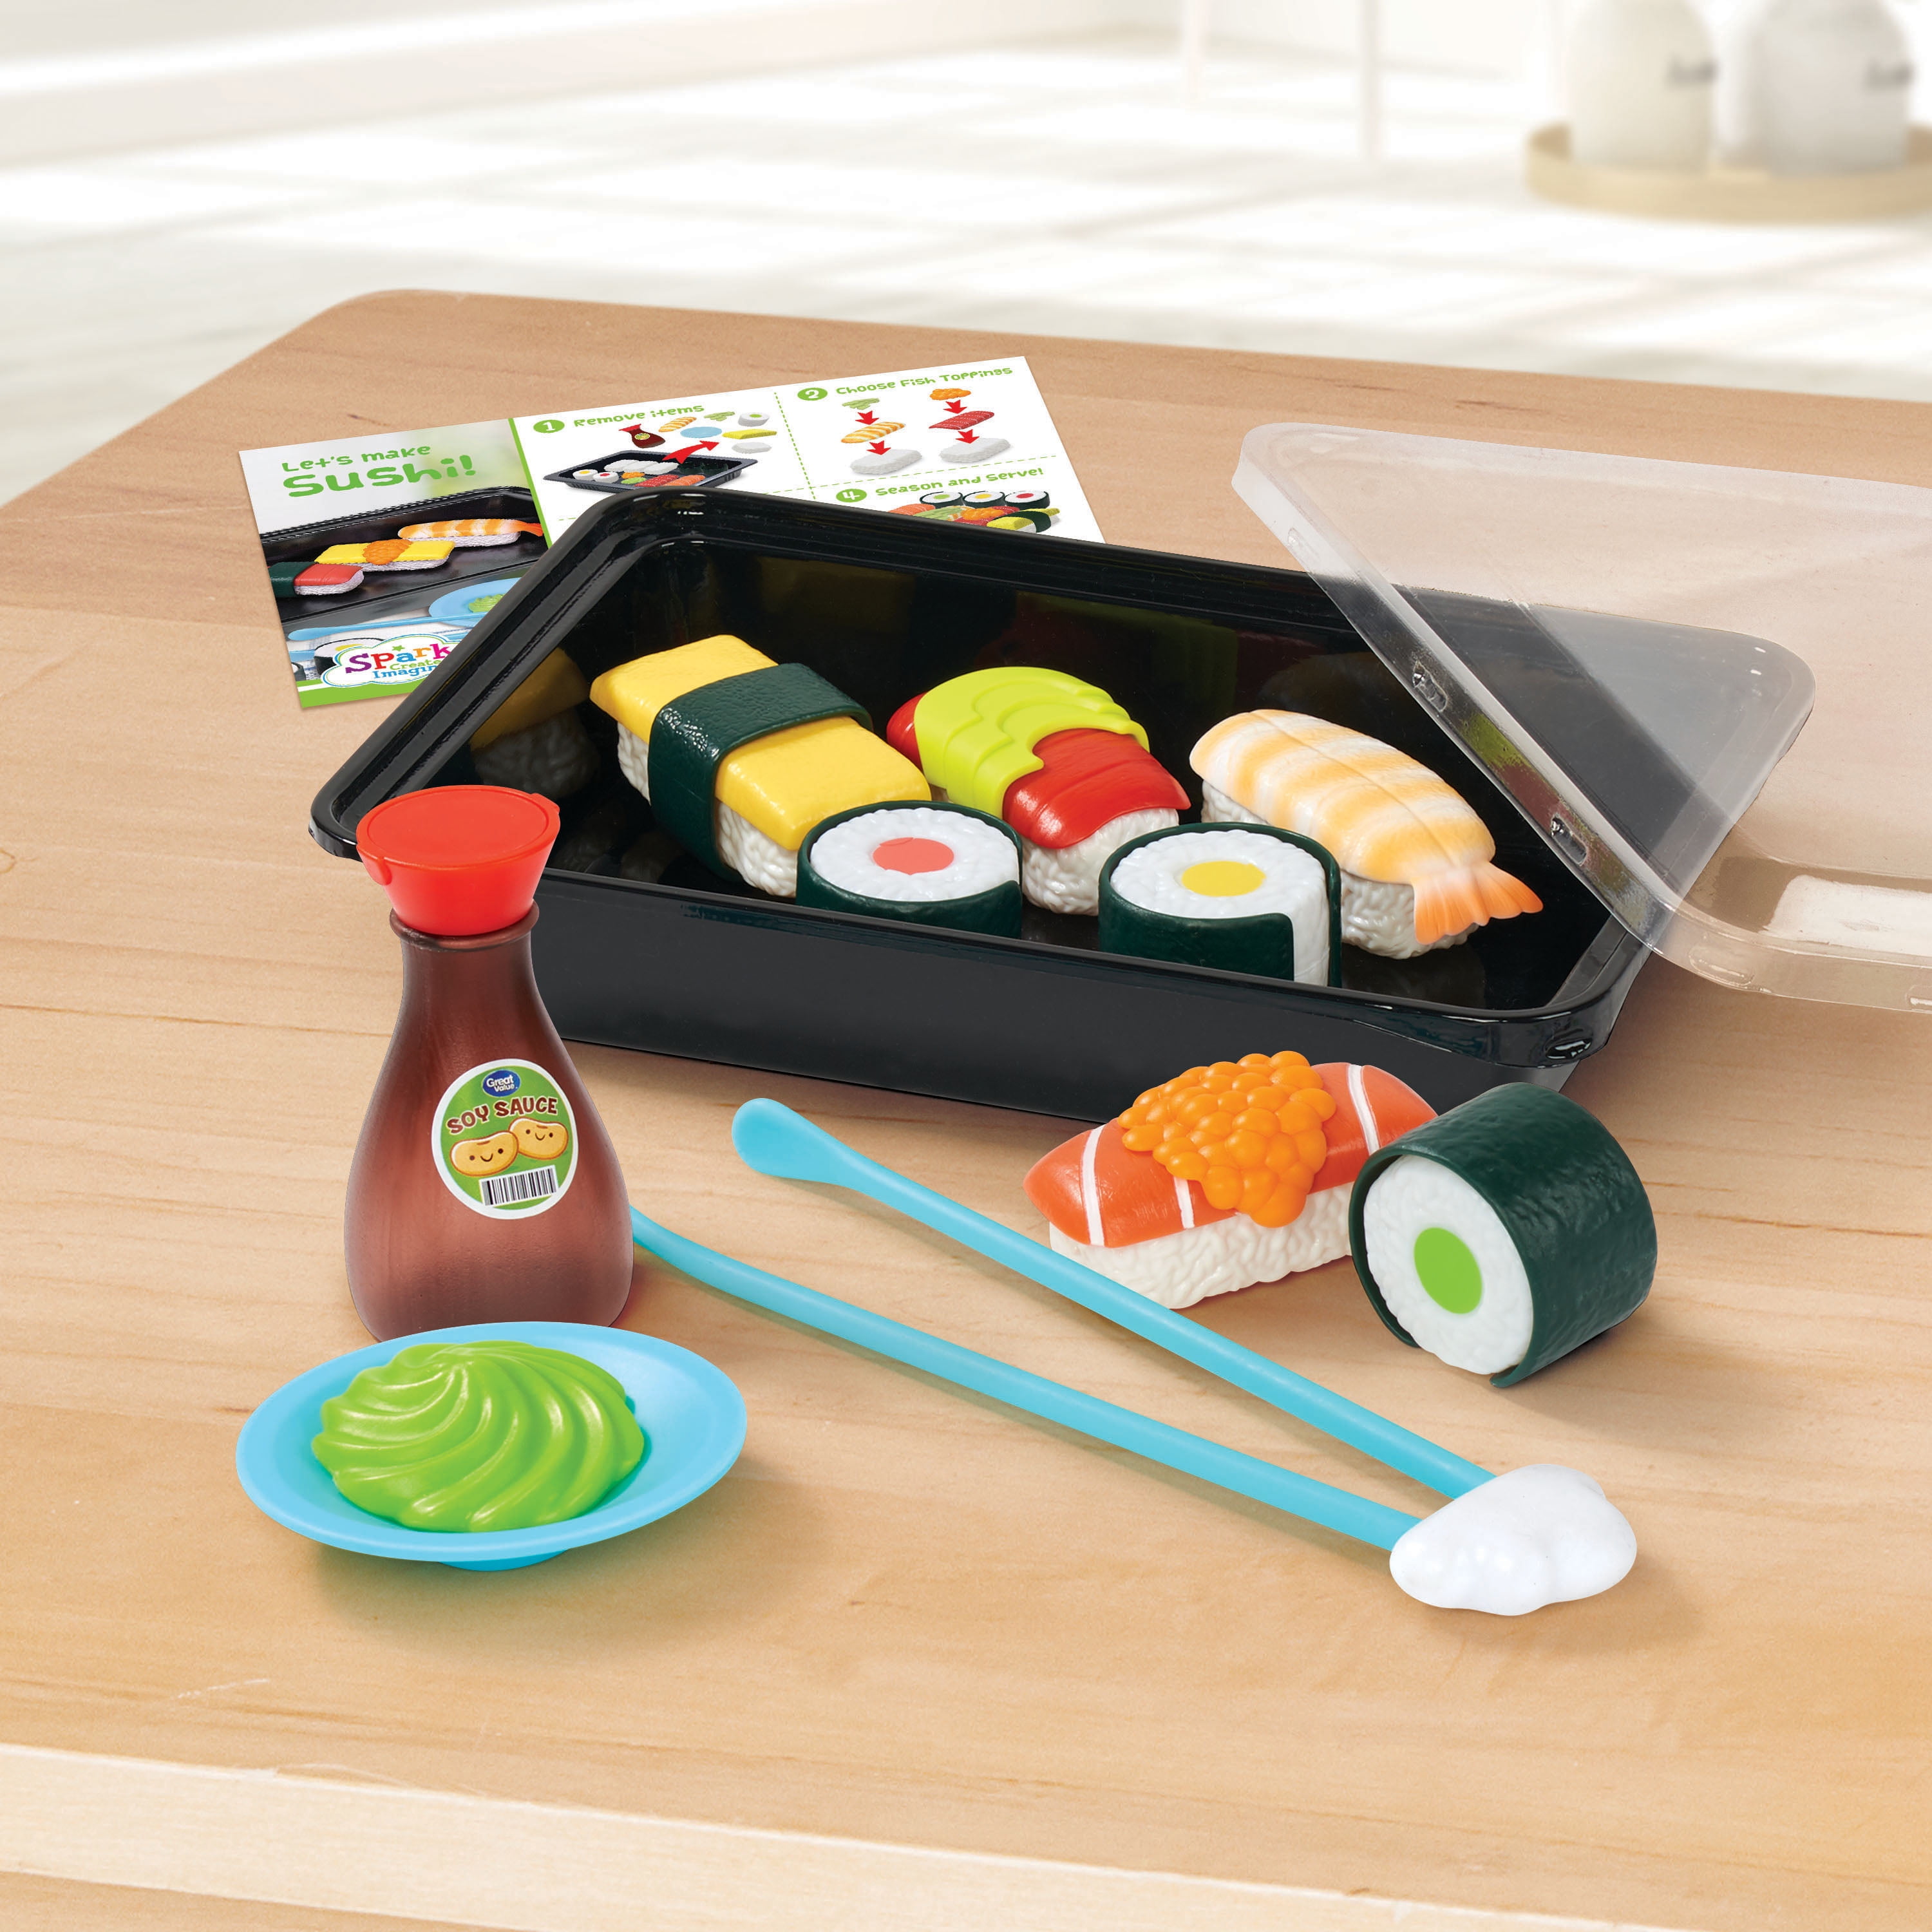 SIMPLY SUSHI KIT - 65 minute DVD Meal Kit - Mat - Fish Tweezers